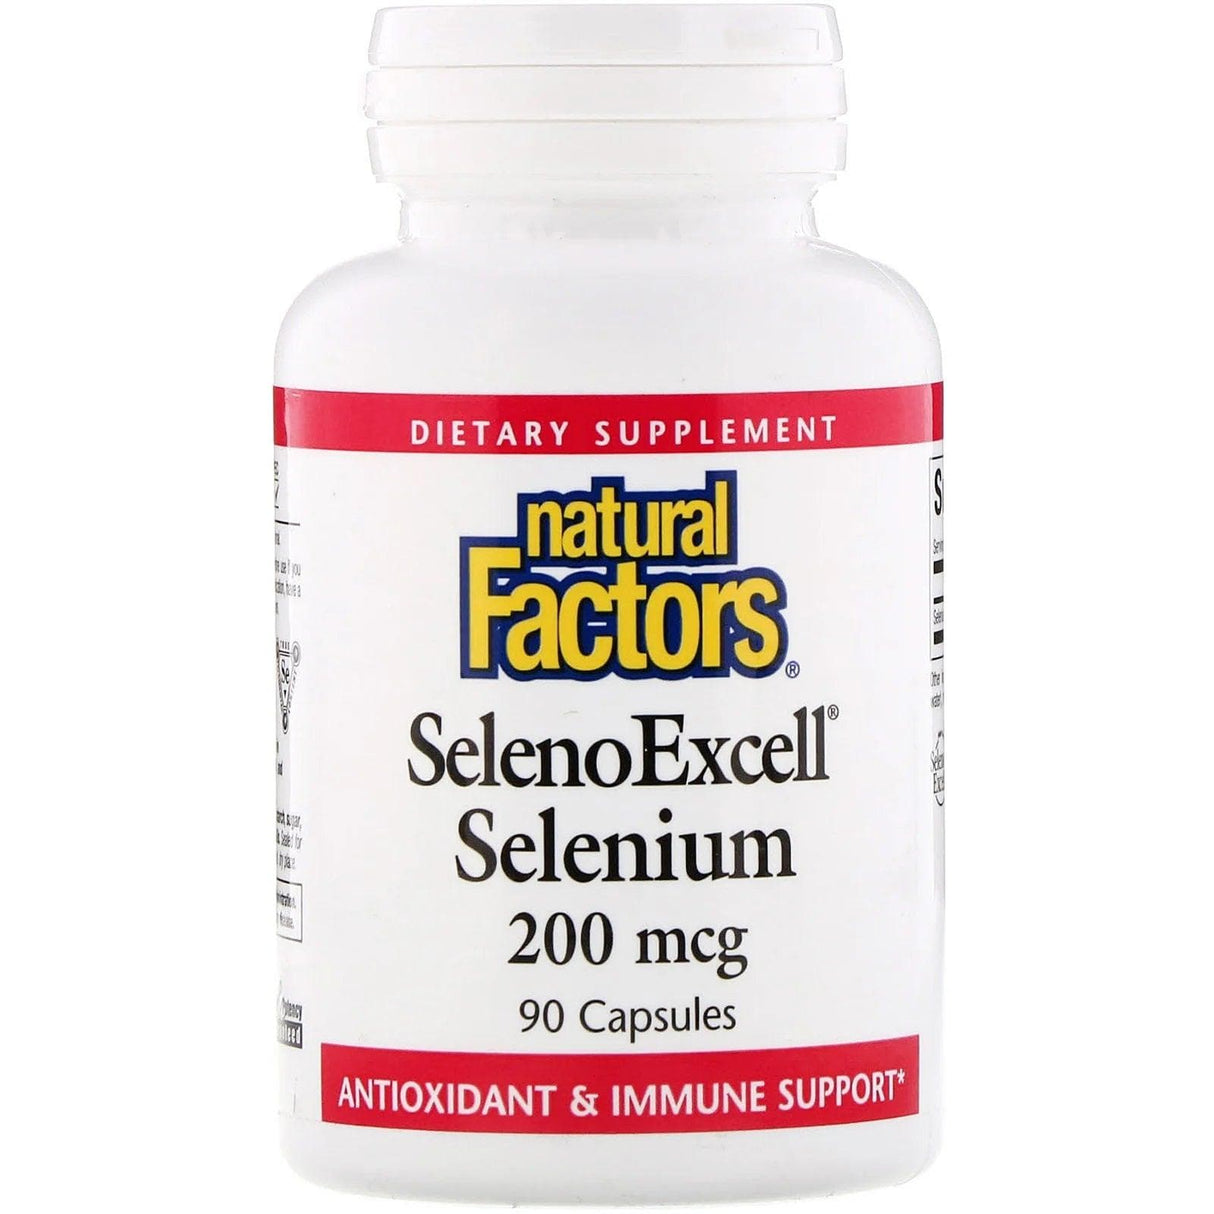 SelenoExcell Selenium Yeast, 200mcg, 90 Capsules - Natural Factors - welzo